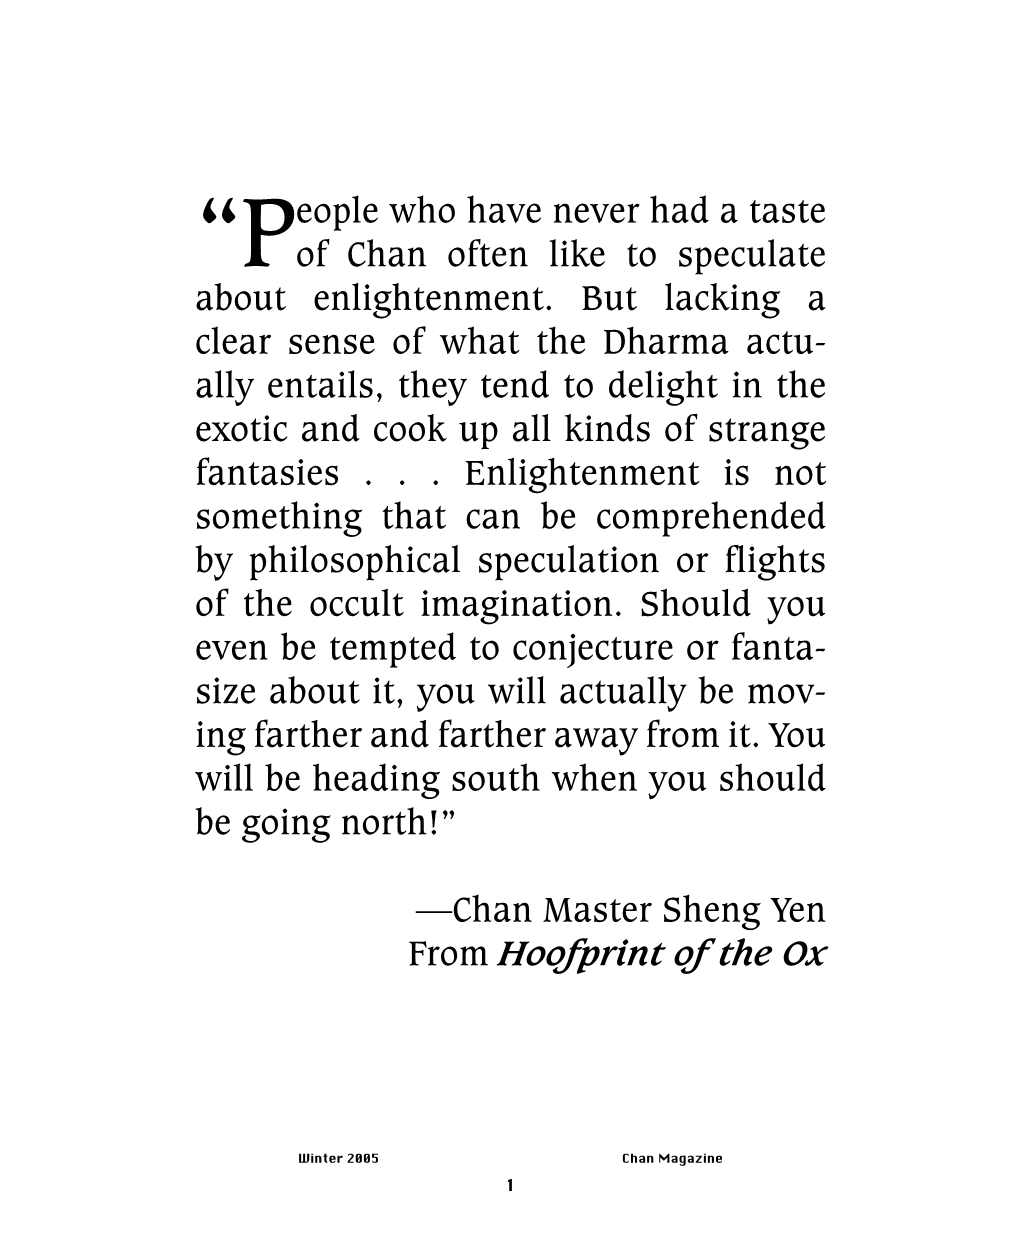 Chan Master Sheng Yen from Hoofprint of the Ox